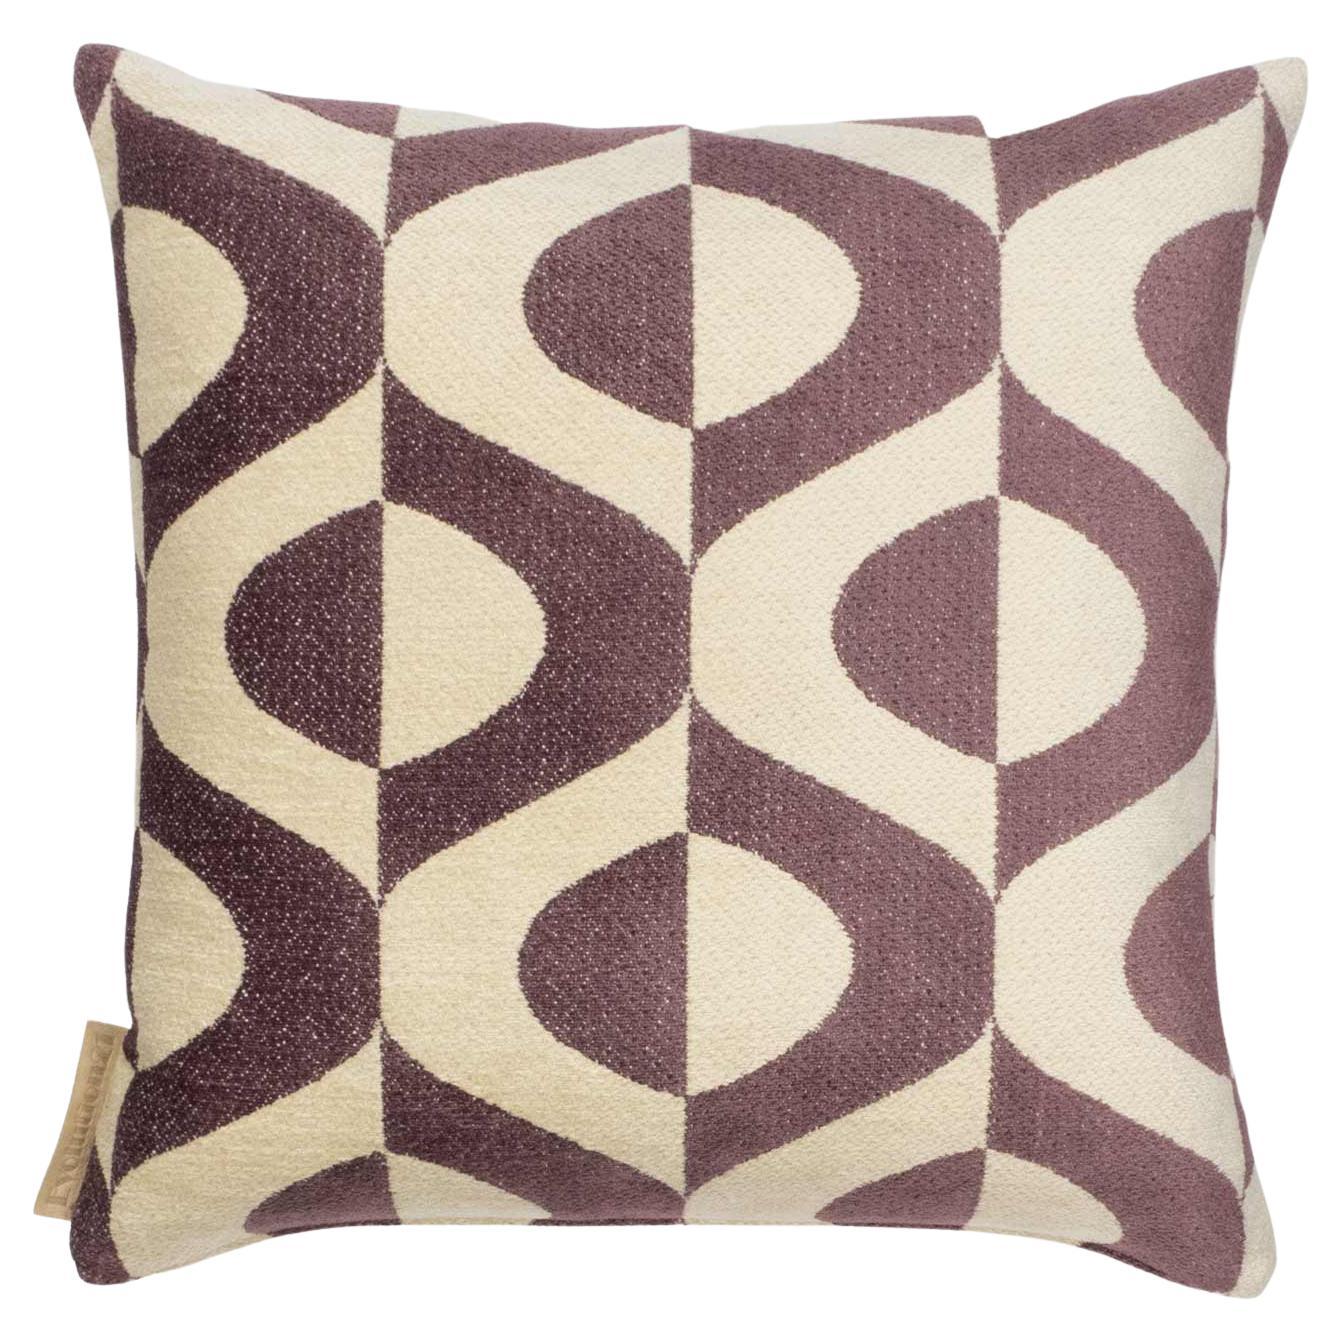 Art Deco Style Ajaccio Purple Beige Pattern Linen Pillow by Evolution21 